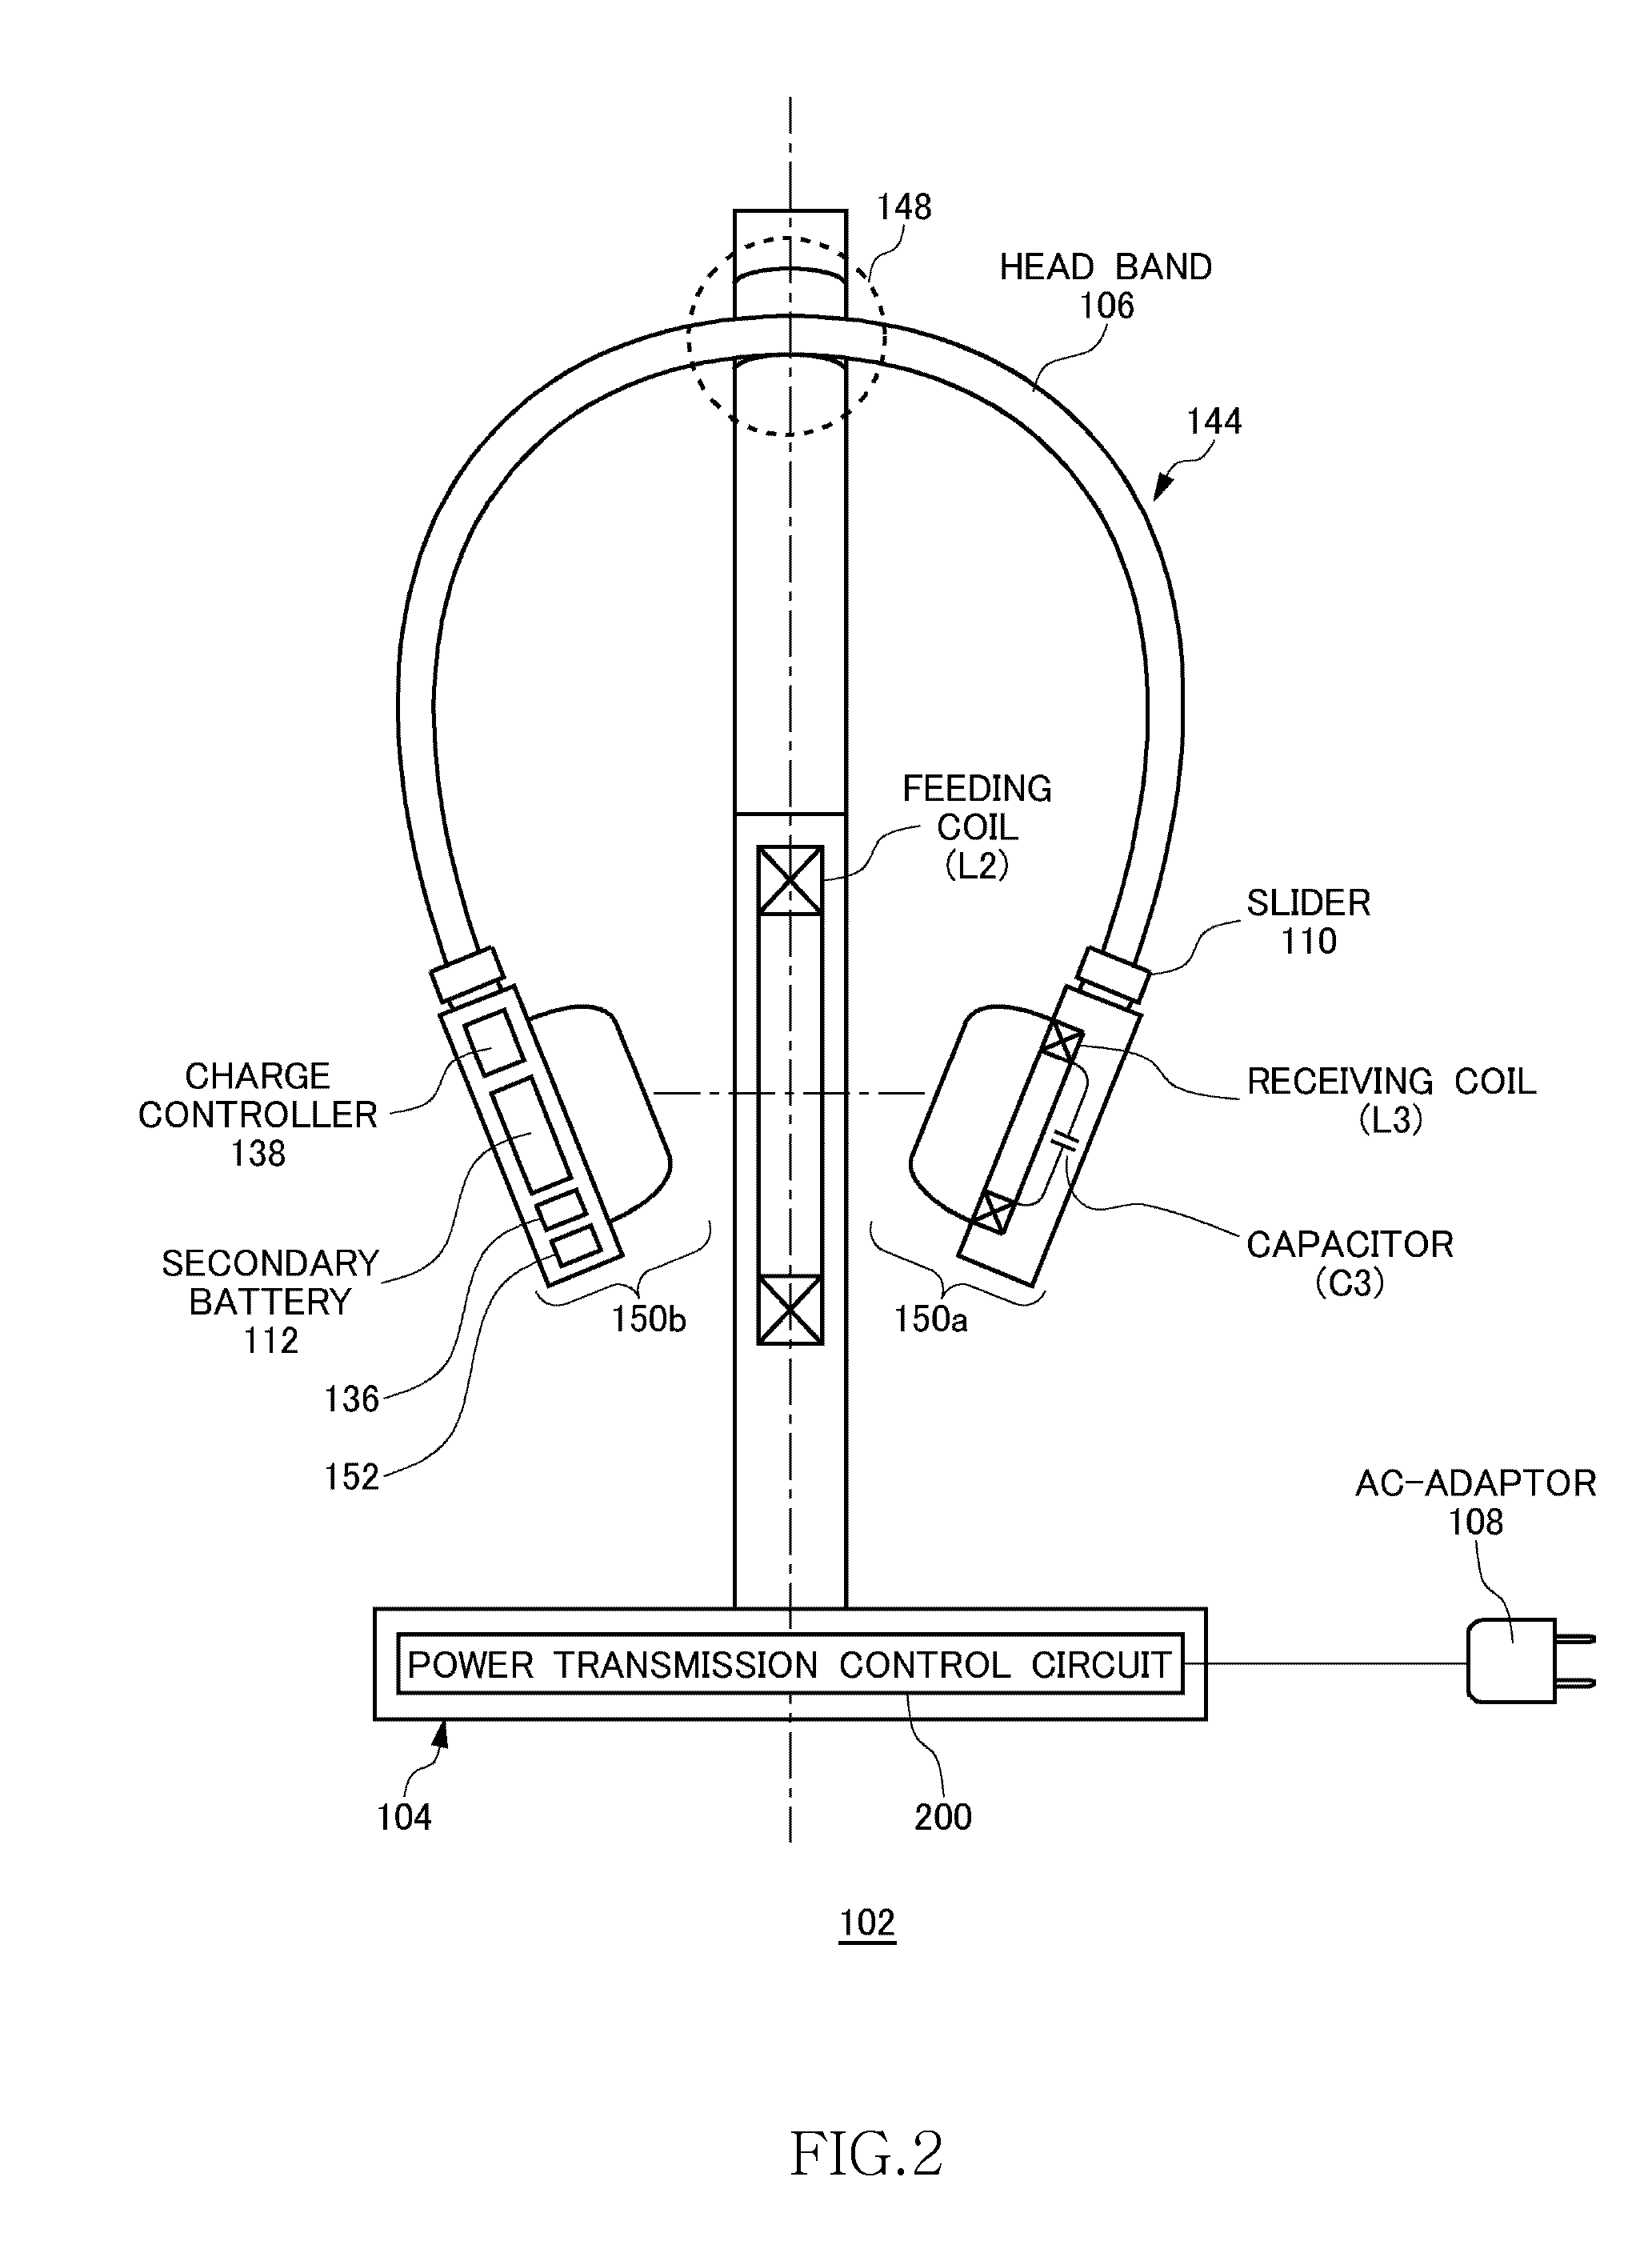 Headphone, headphone stand and headphone system